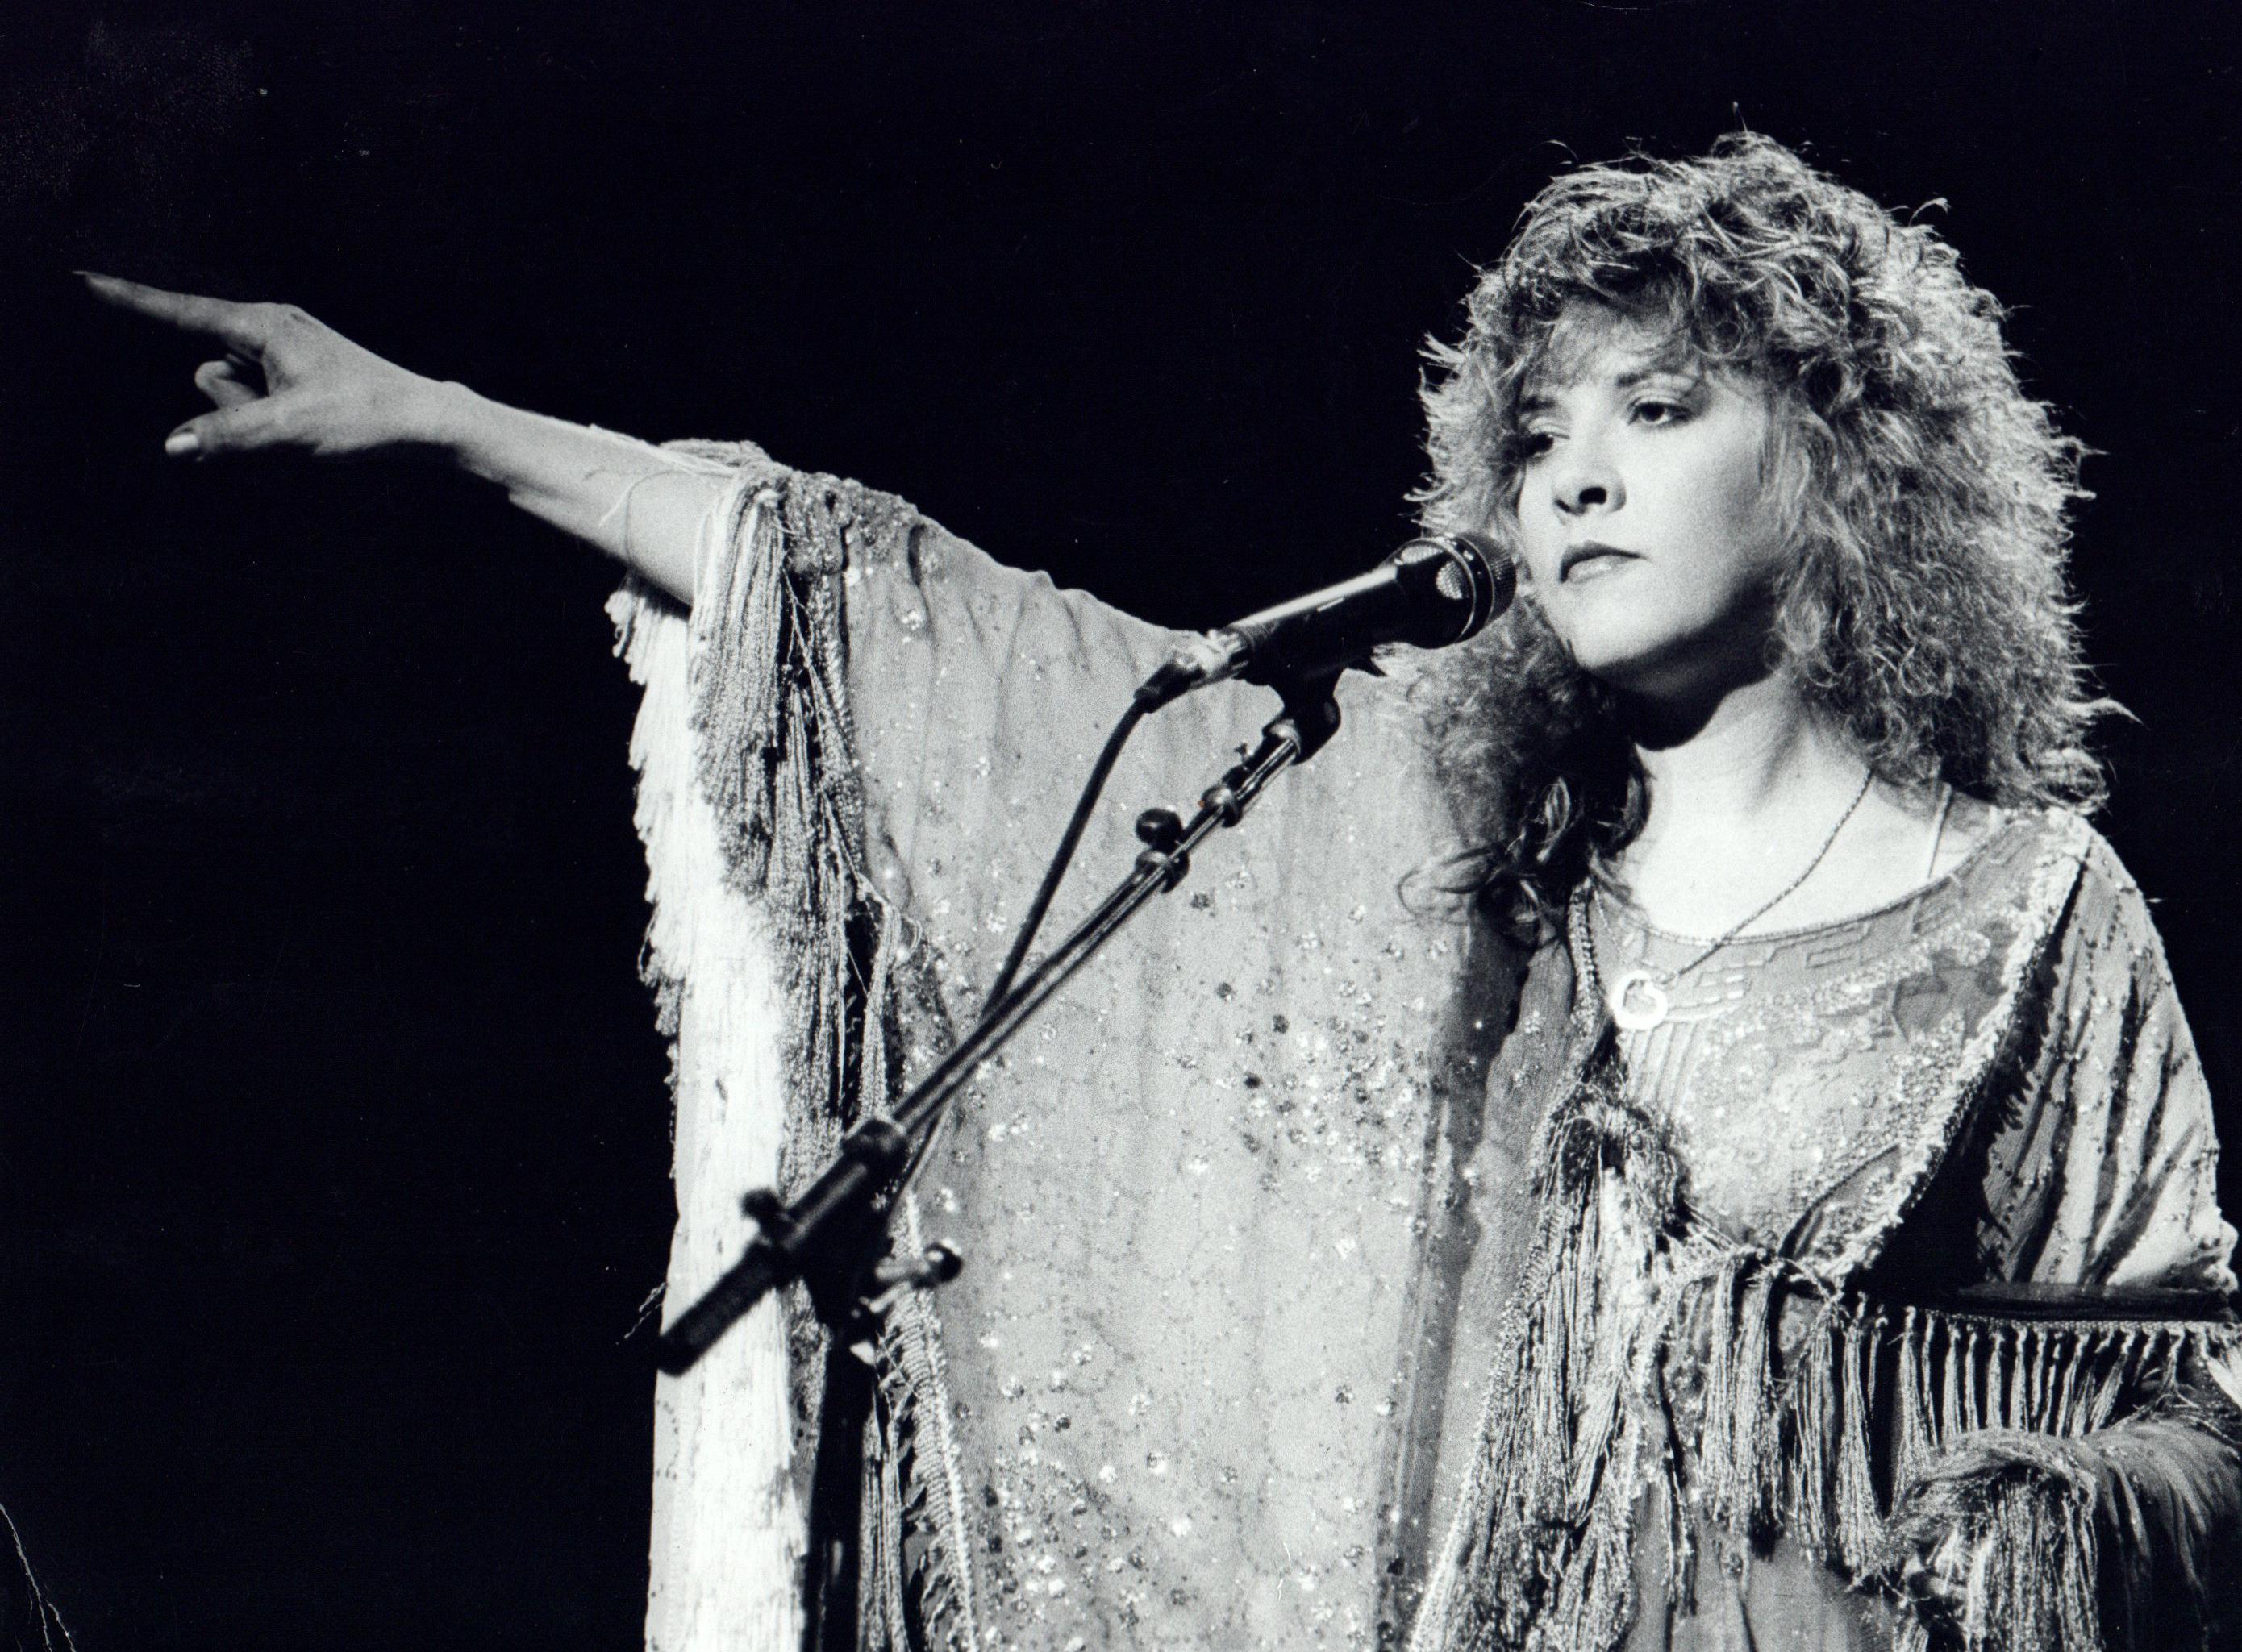 Anastasia Pantsios Portrait Photograph - Stevie Nicks of Fleetwood Mac Pointing on Stage Vintage Original Photograph